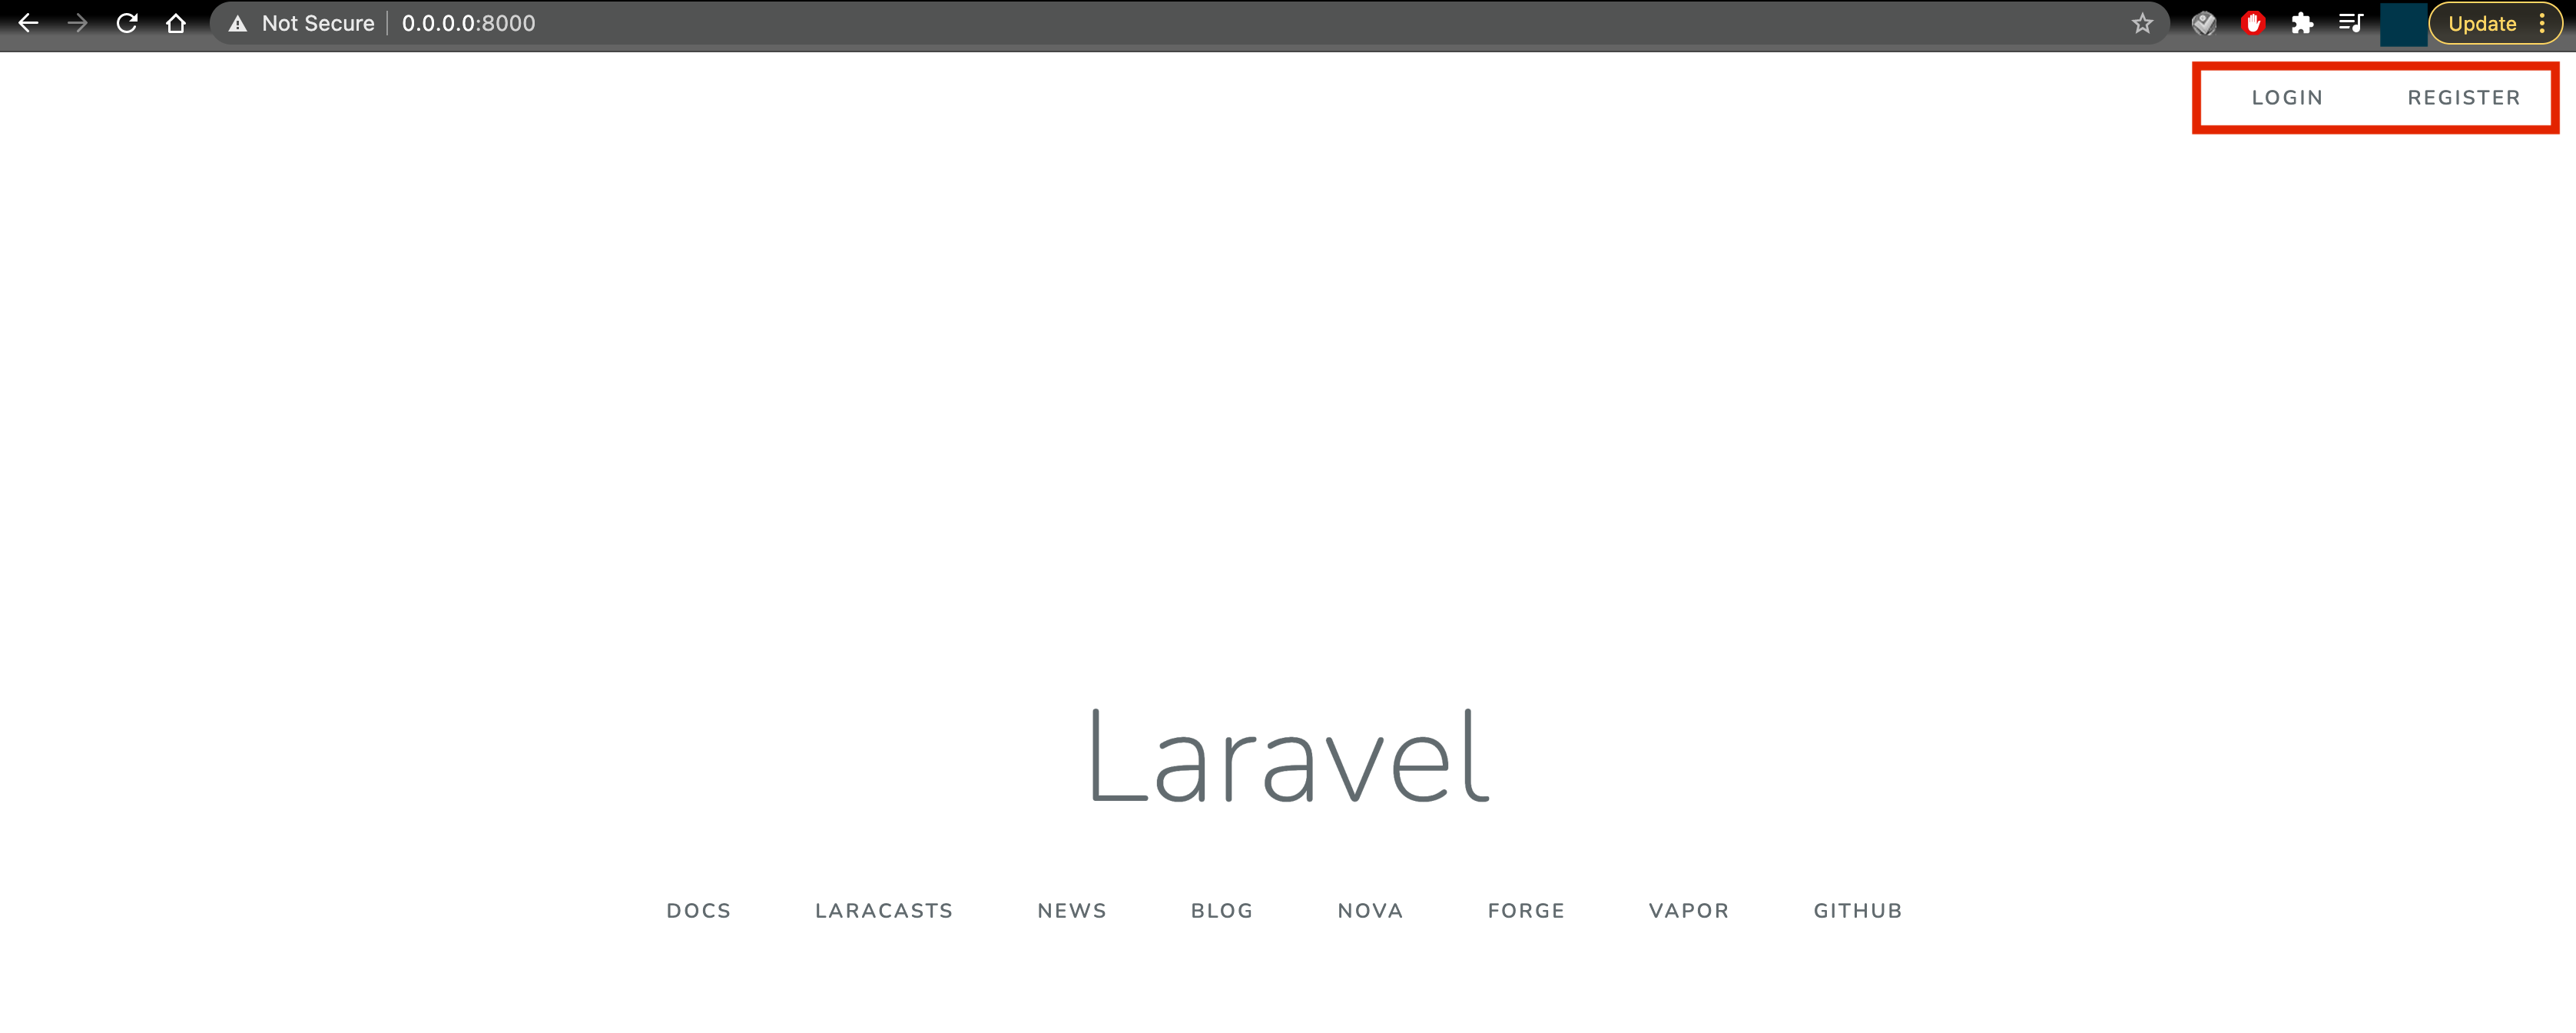 laravel_v6_welcom画面2.png